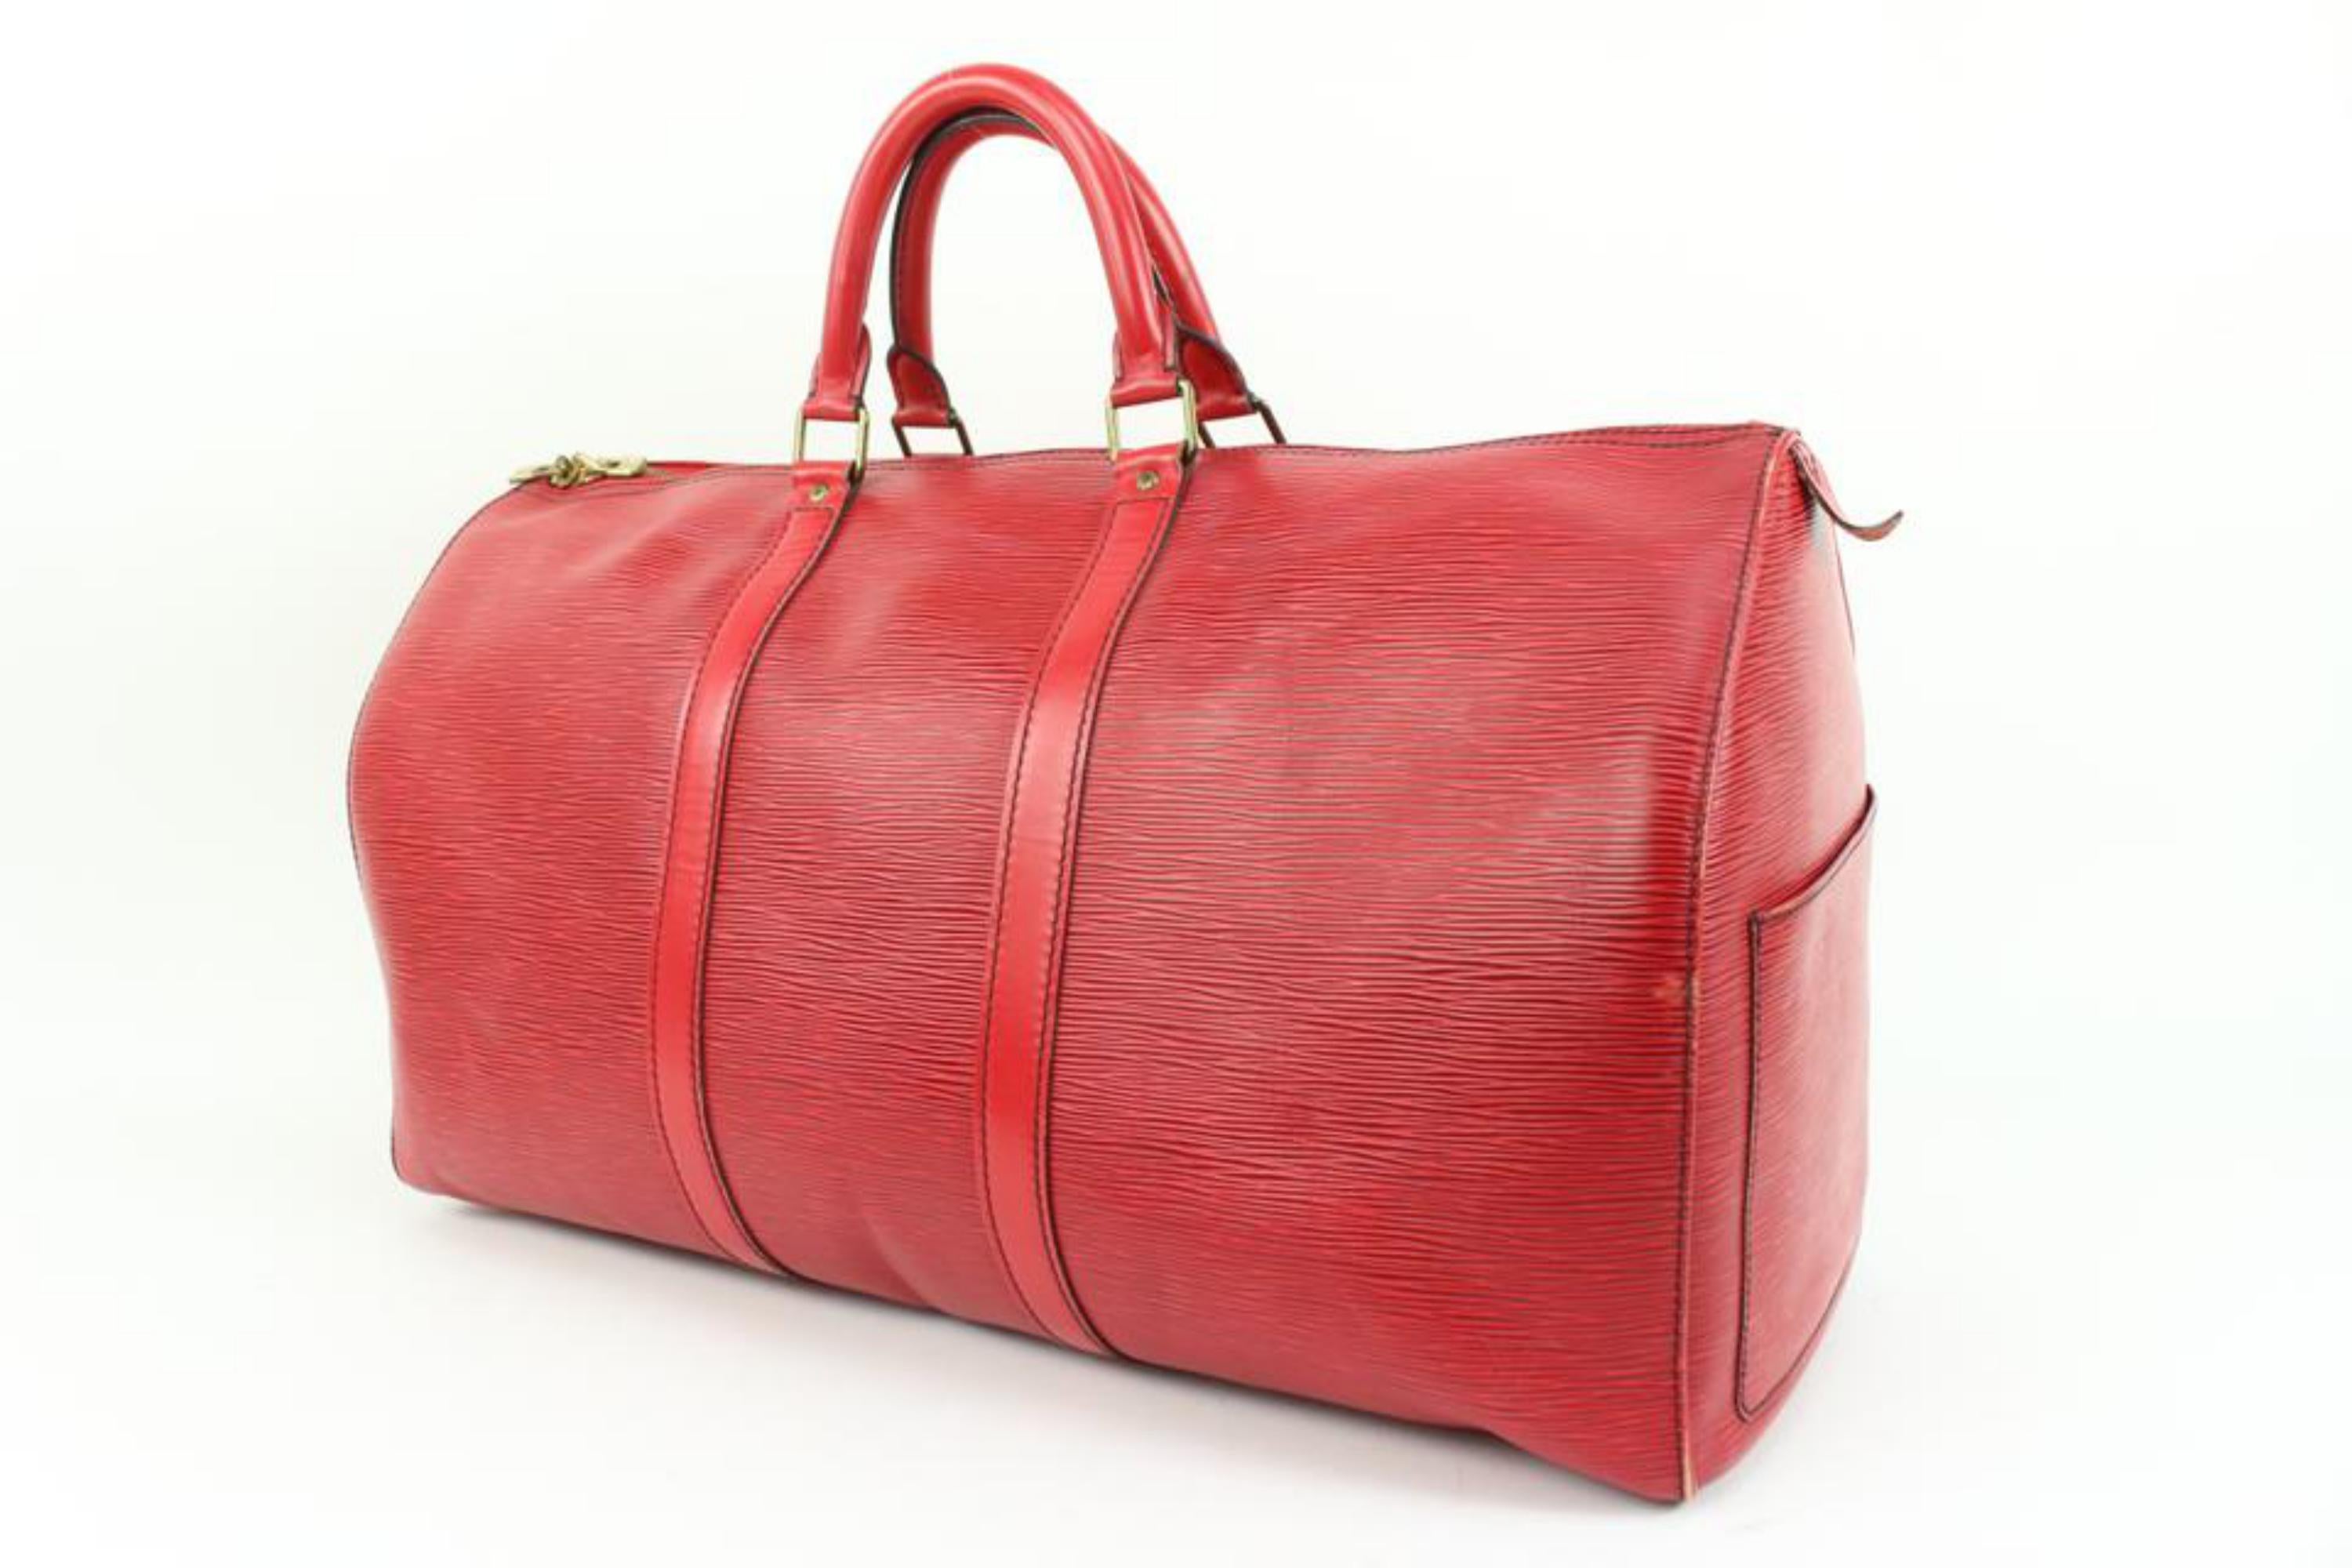 Louis Vuitton Rot Epi Leder Keepall 50 Duffle Bag 89lk328s
Datum Code/Seriennummer: VI8907
Hergestellt in: Frankreich
Maße: Länge:  20